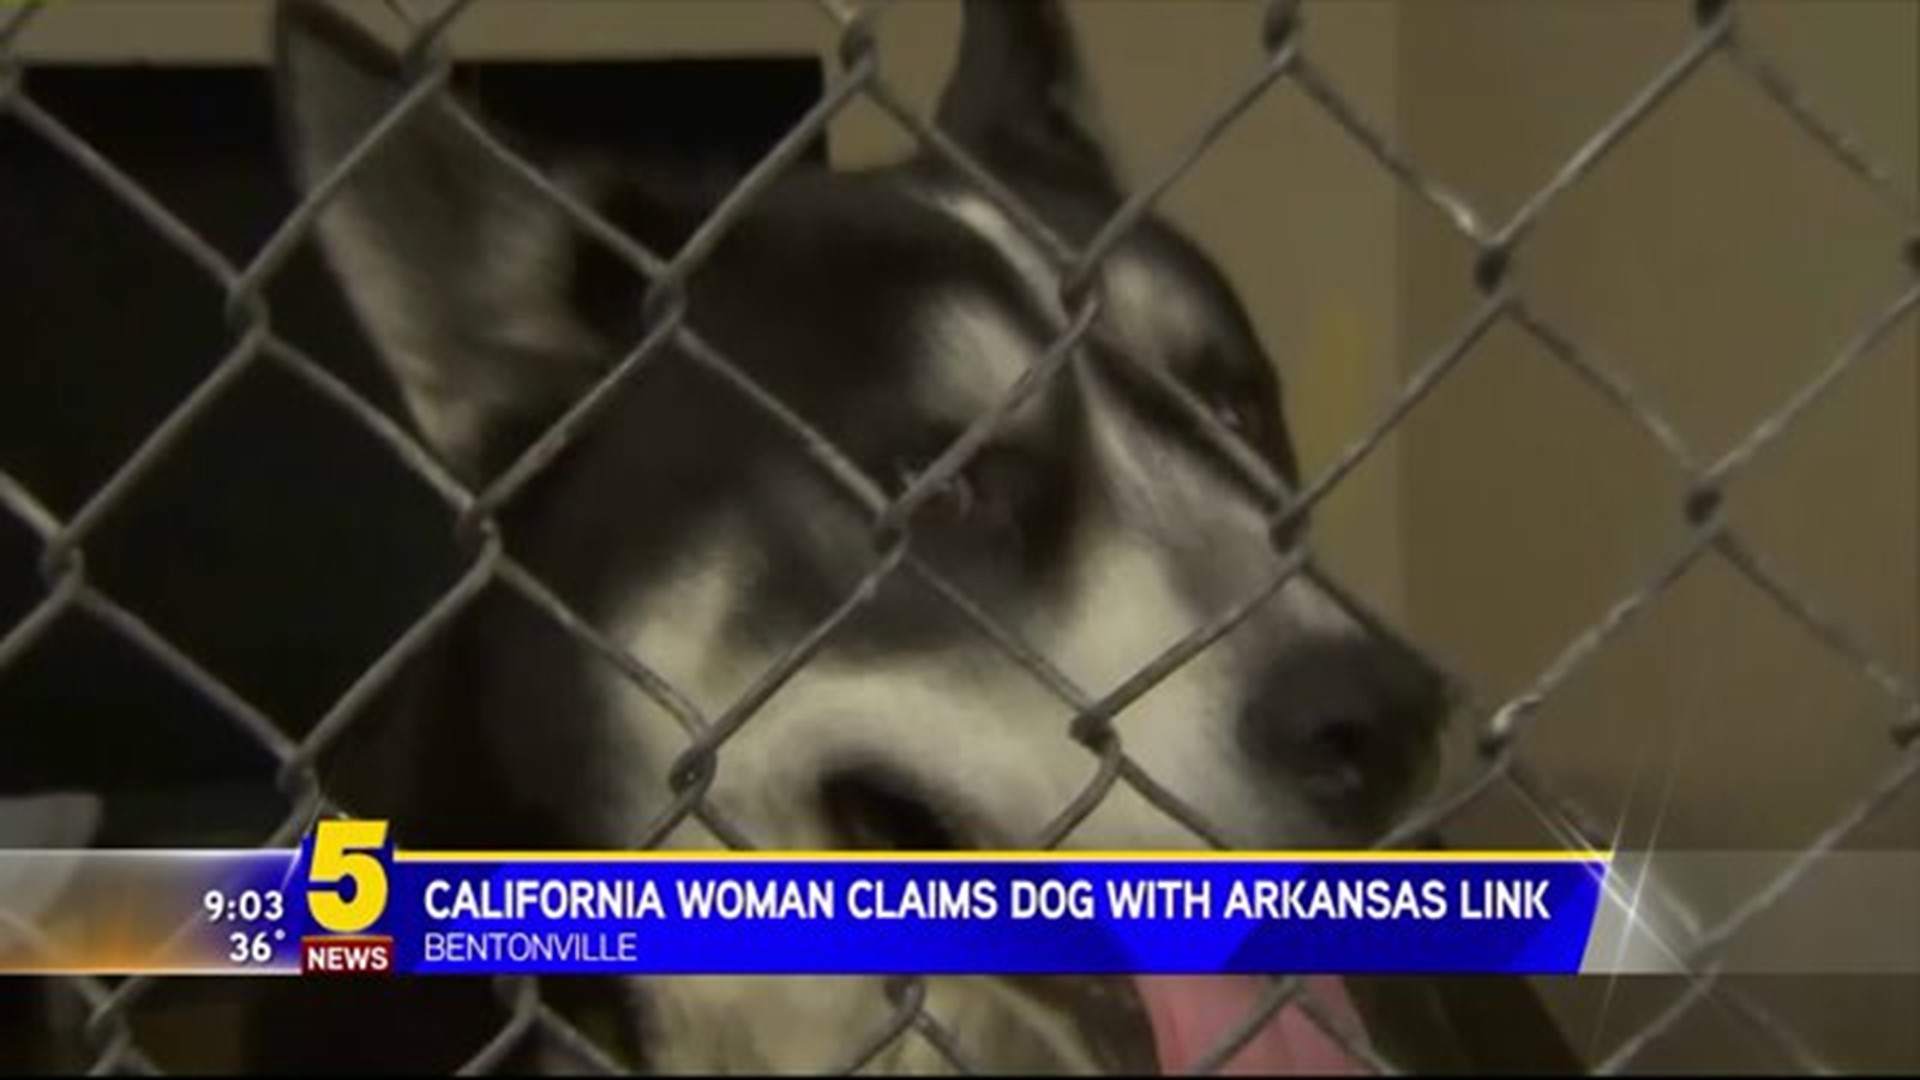 CALIFORNIA WOMAN CLAIMS DOG WITH ARKANSAS LINK